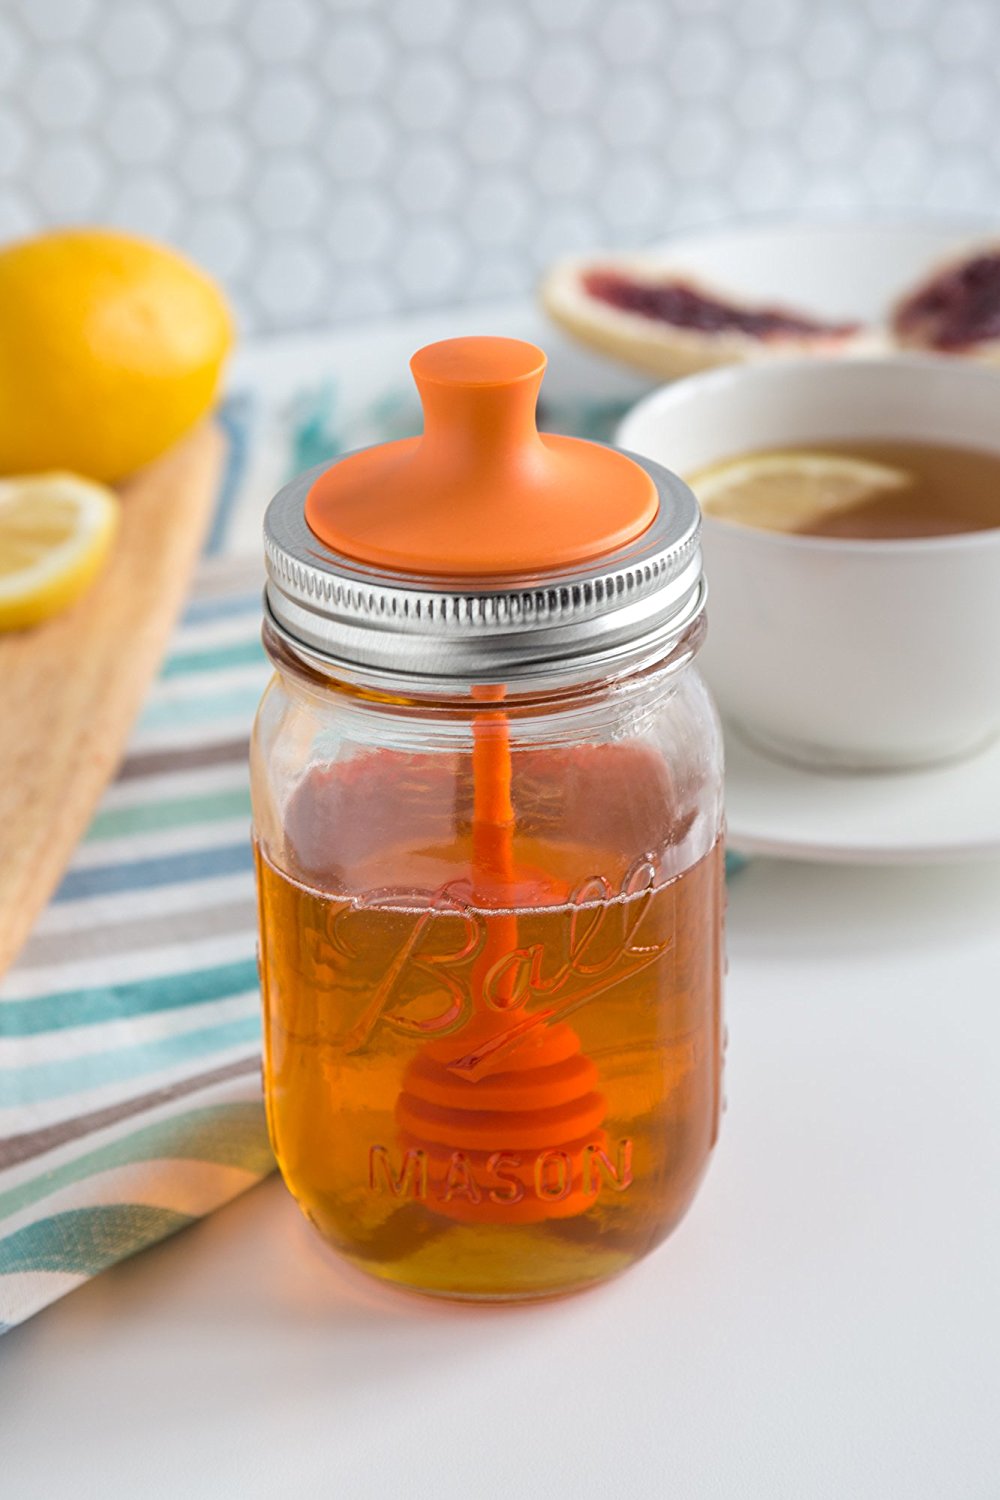 238244 - Jarware, Orange, Honey Dipper Lid For R/M / ฝาขวดน้ำผึ้งฟอกซ์รัน